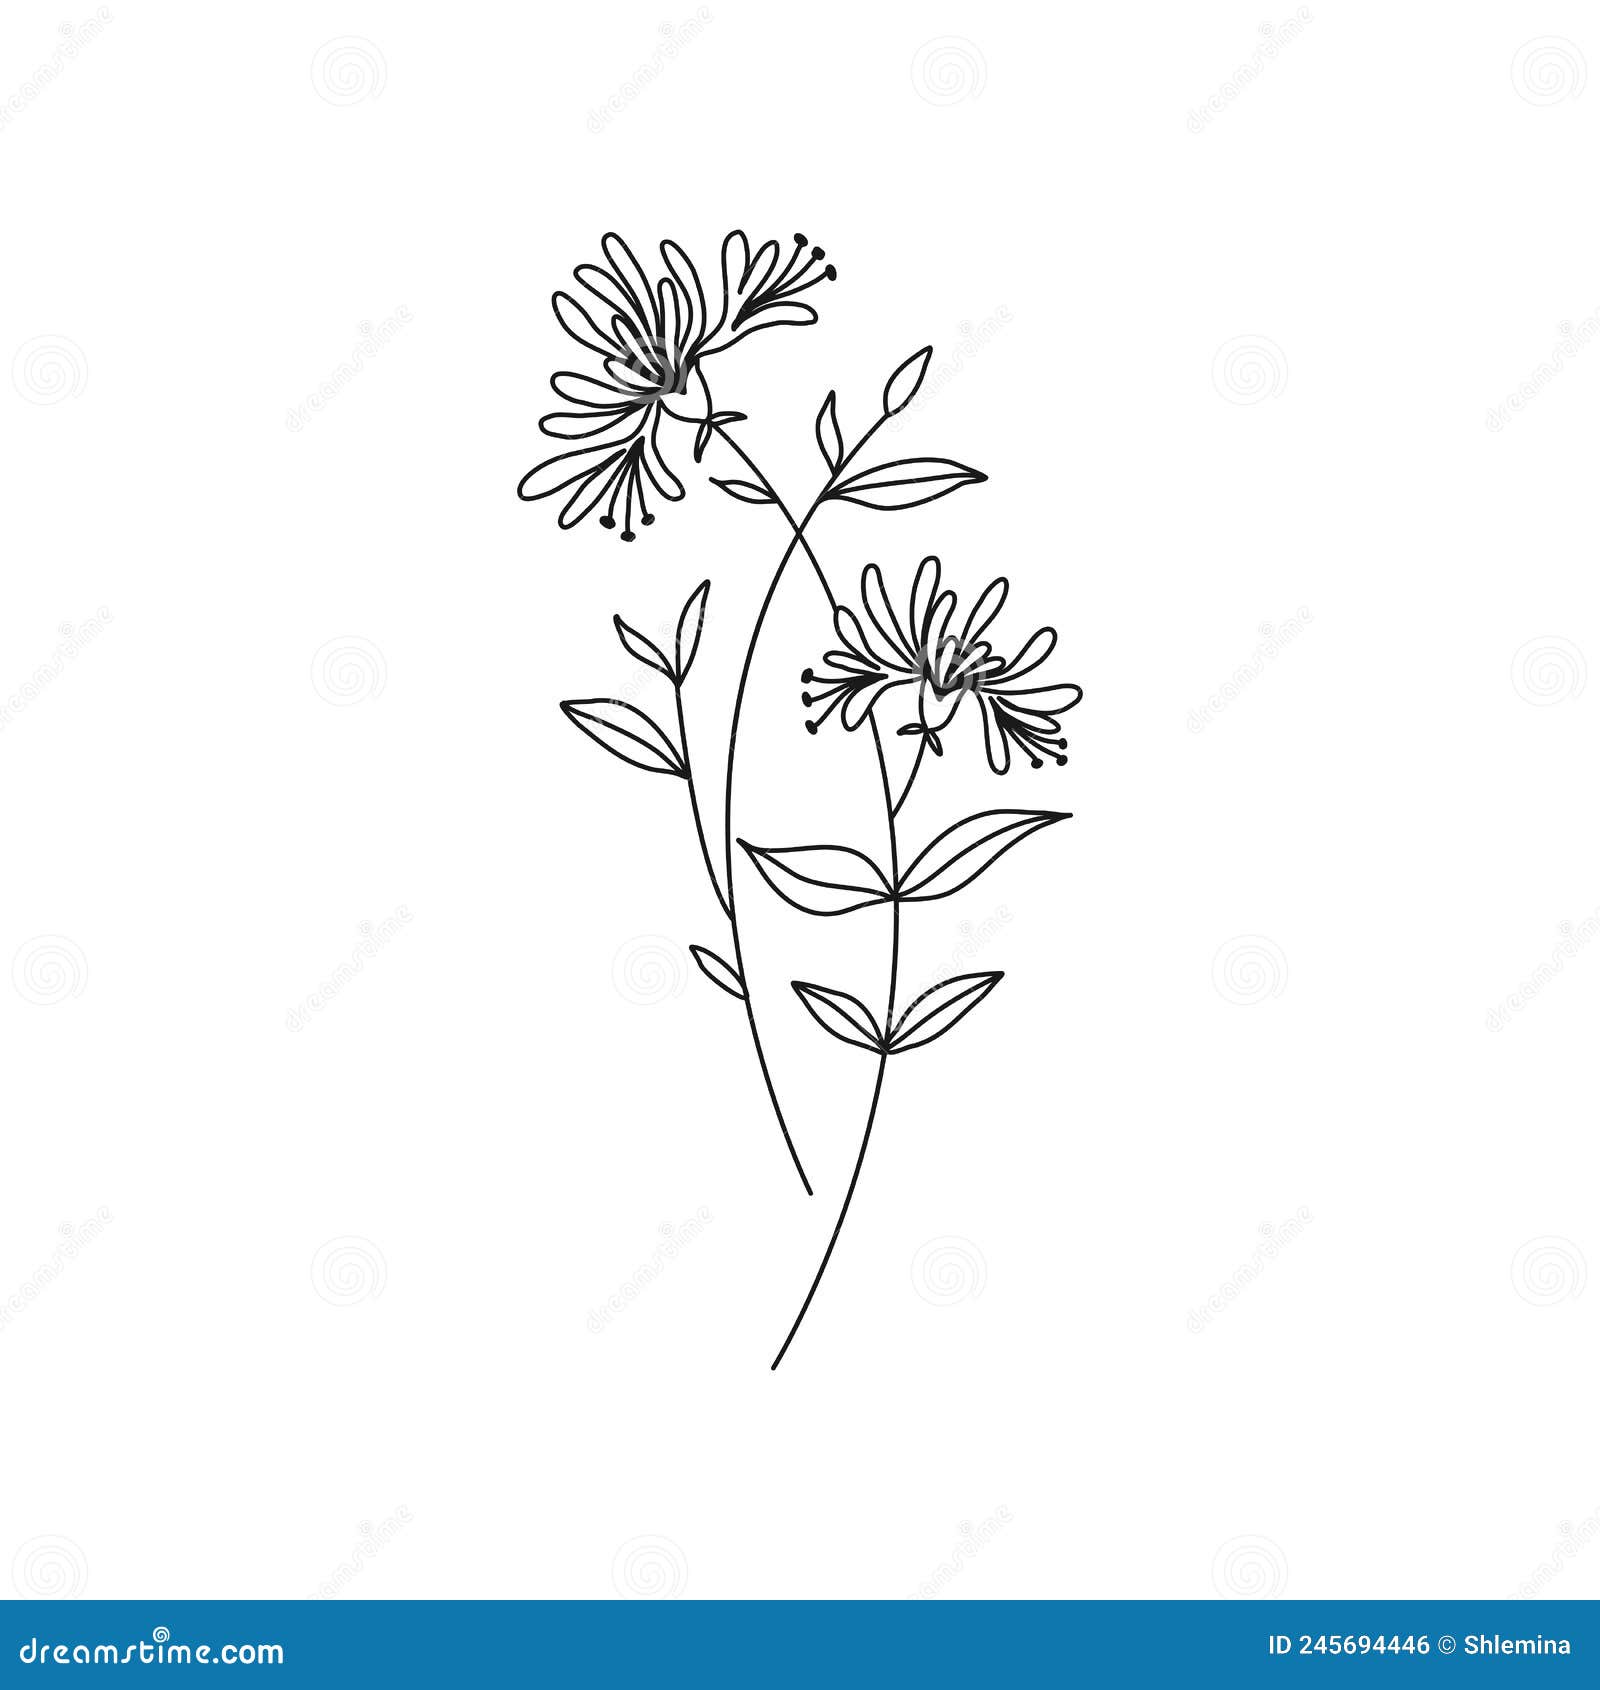 Honeysuckle June Birth Month Flower Illustration Stock Vector   Illustration of cutting sign 245694446